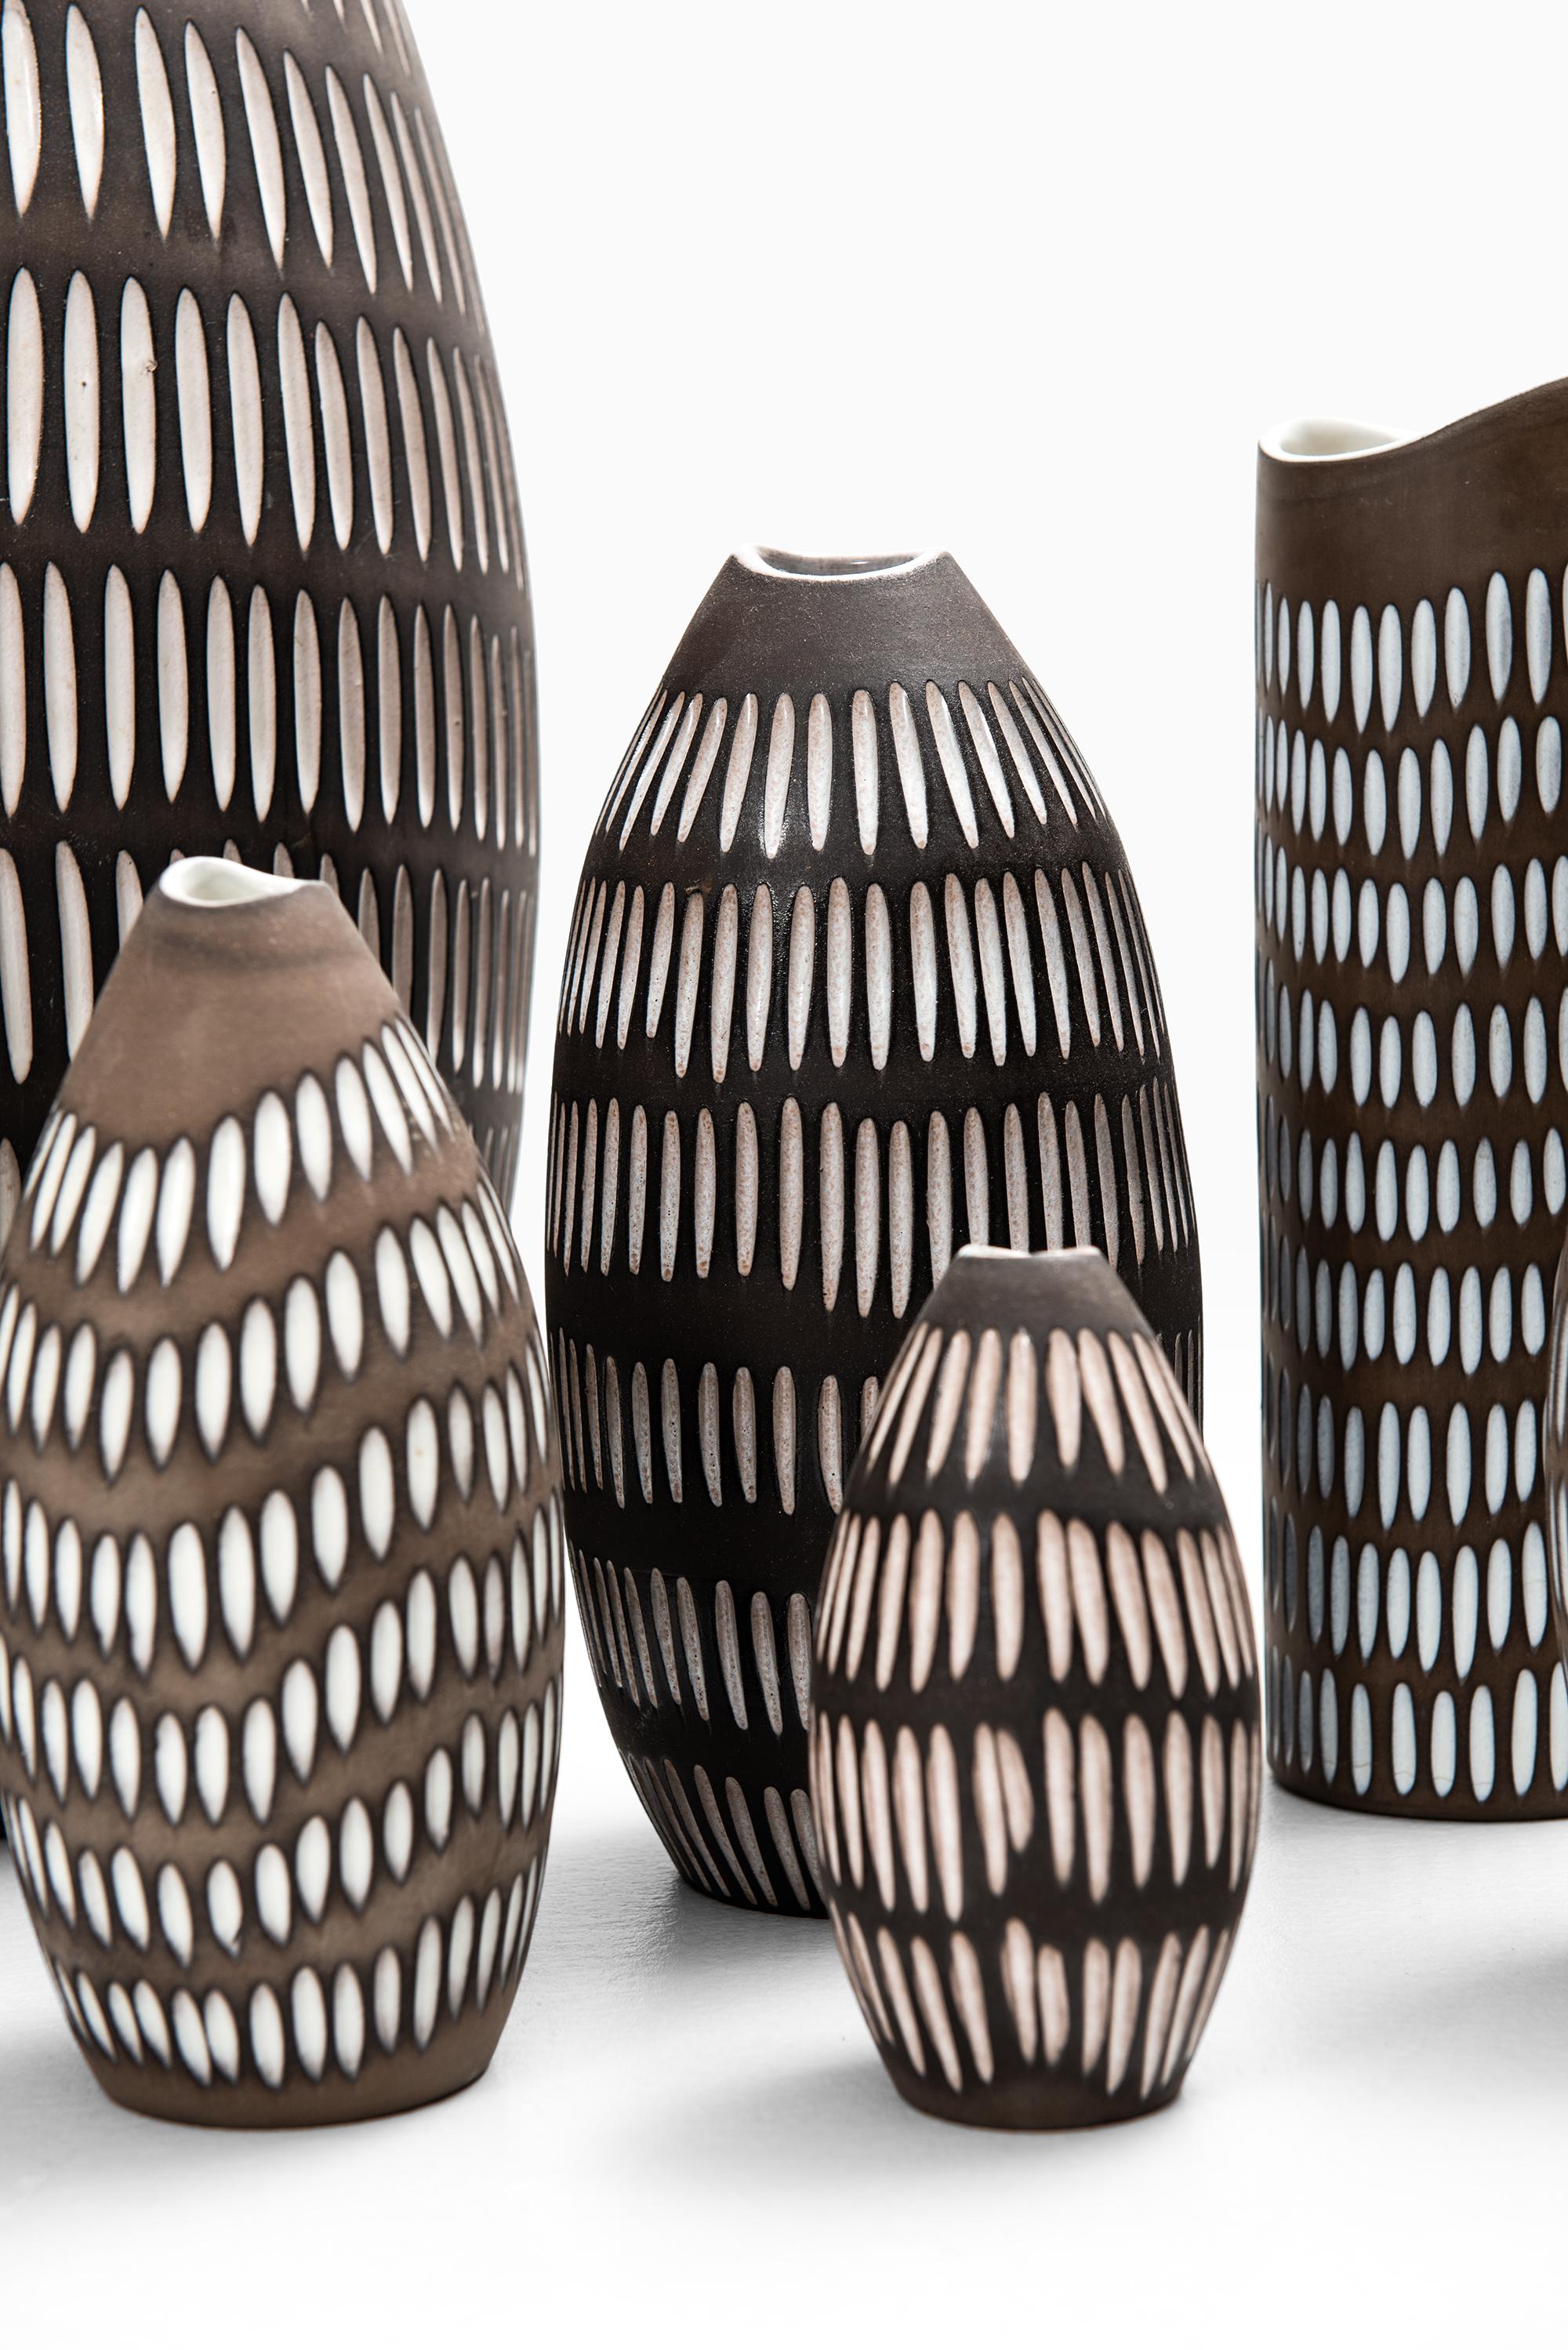 A set of 8 ceramic vases model Negro designed by Ingrid Atterberg. Produced by Upsala Ekeby in Sweden.